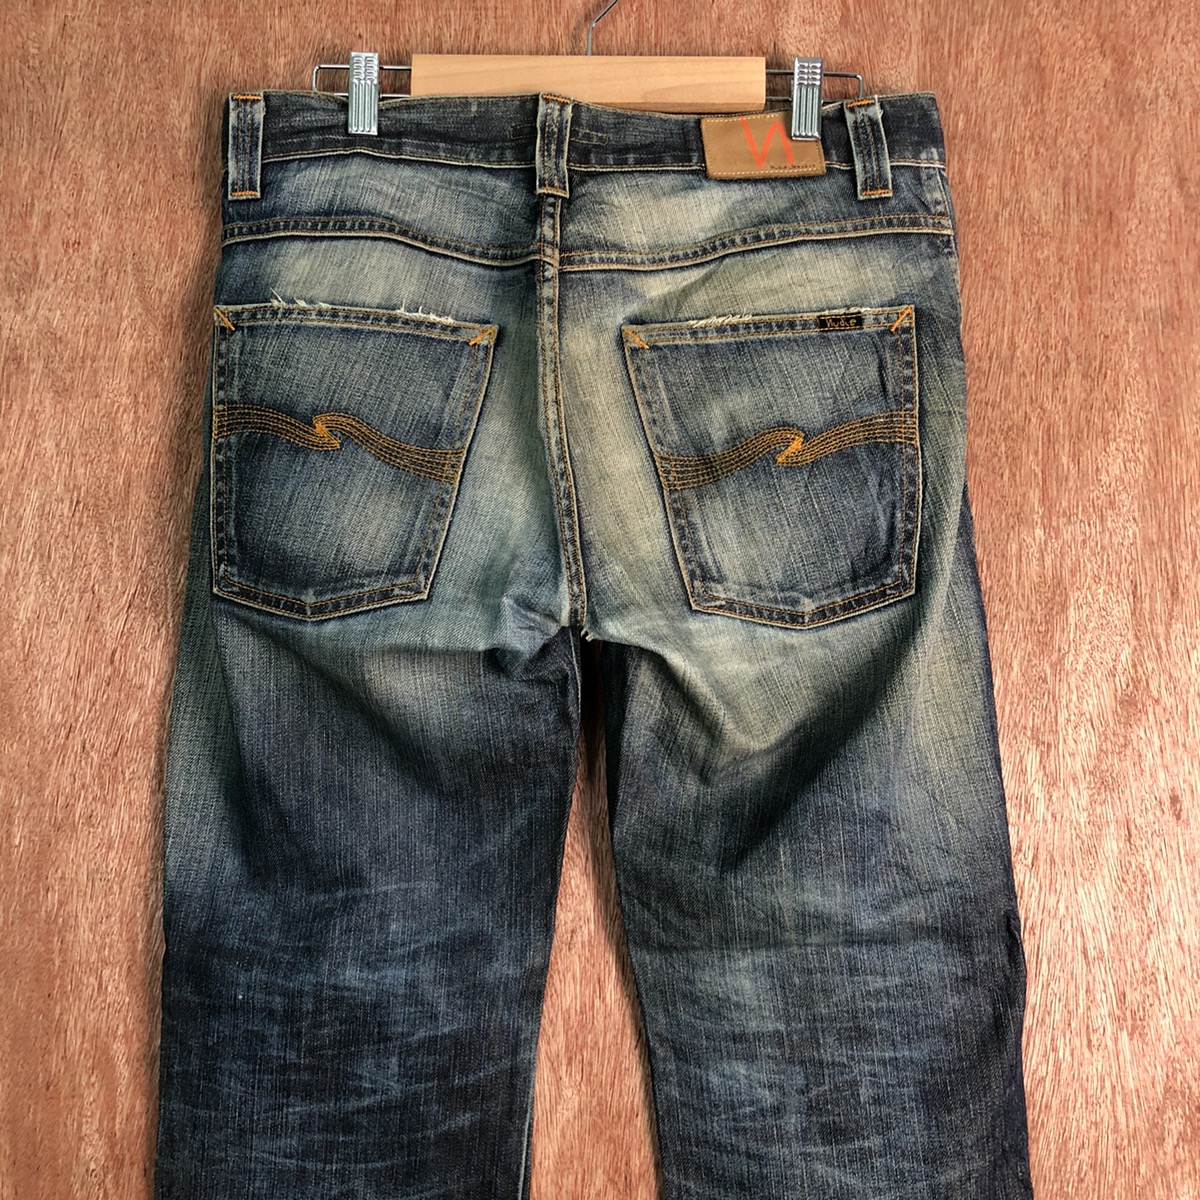 Nudie Jeans Co Blue Denim Jeans Pants #c139 - 2